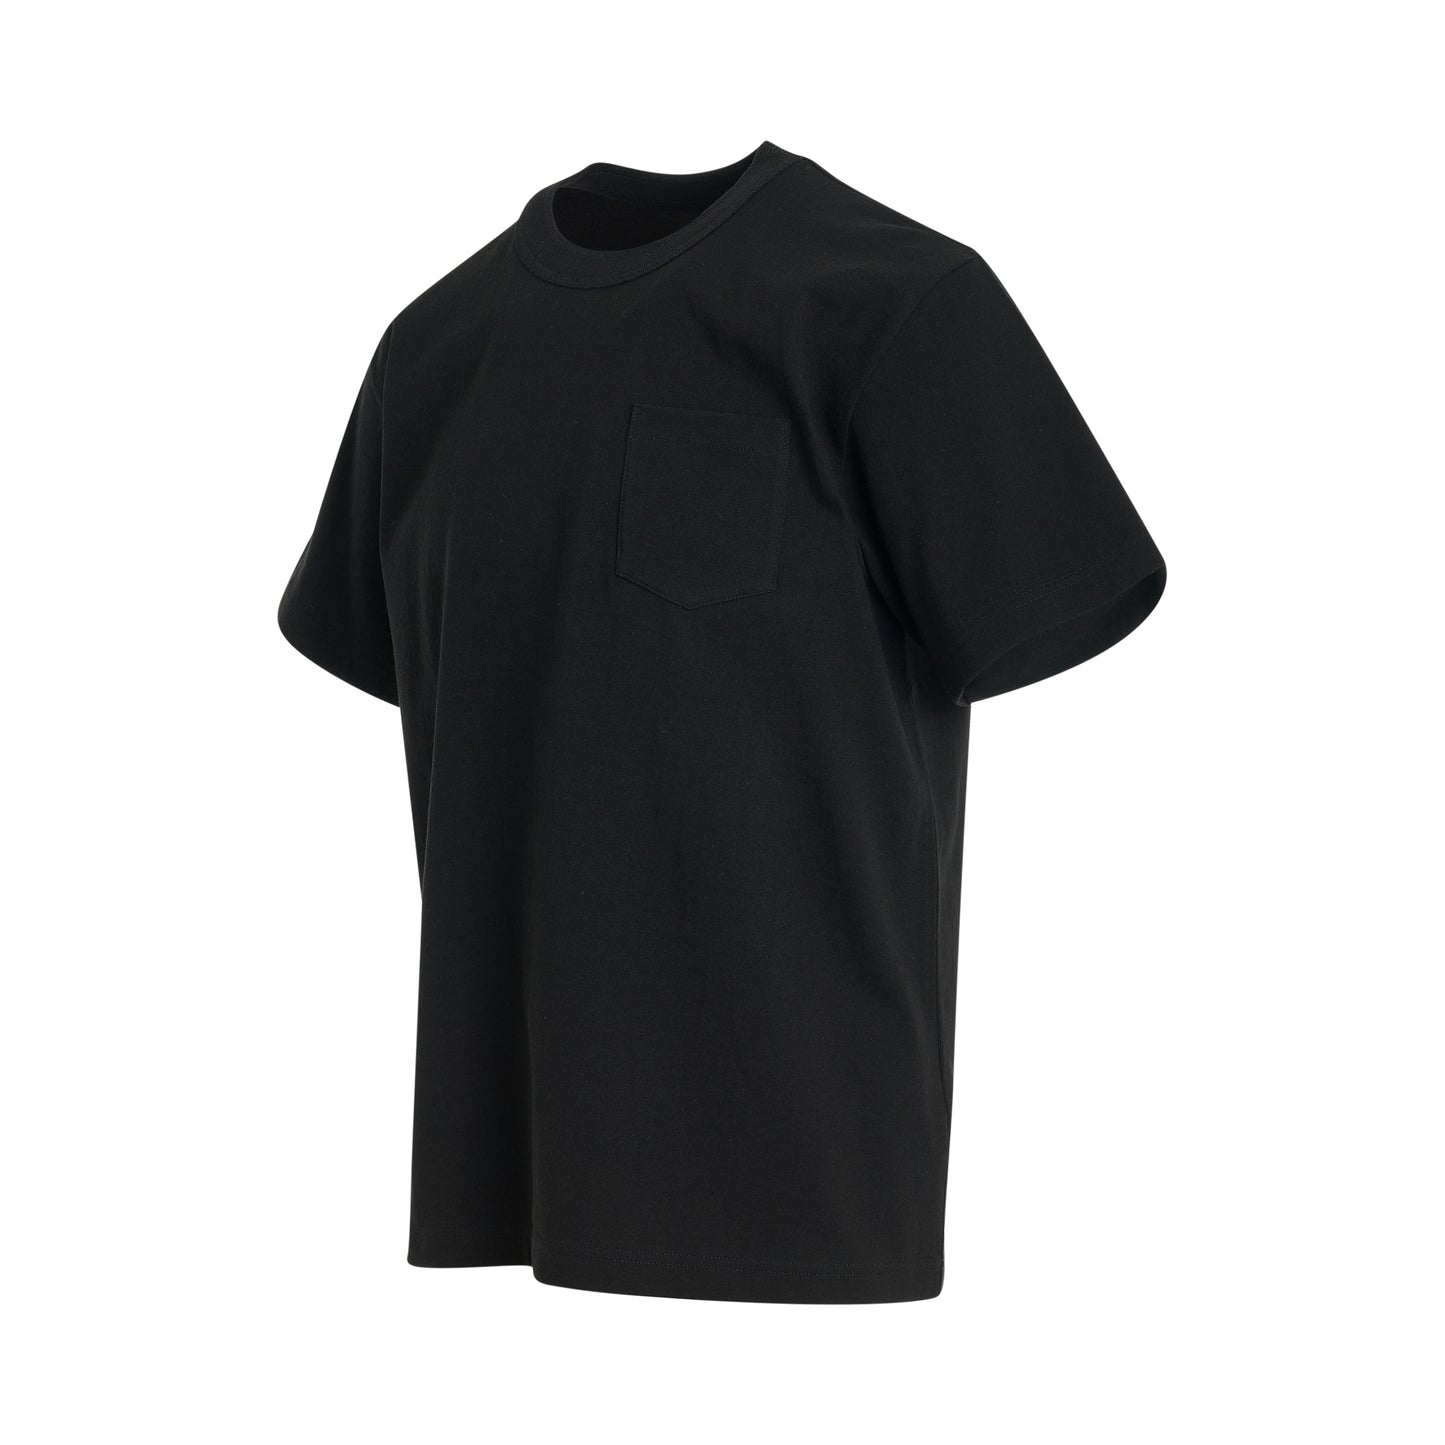 "Simple" Print T-Shirt in Black